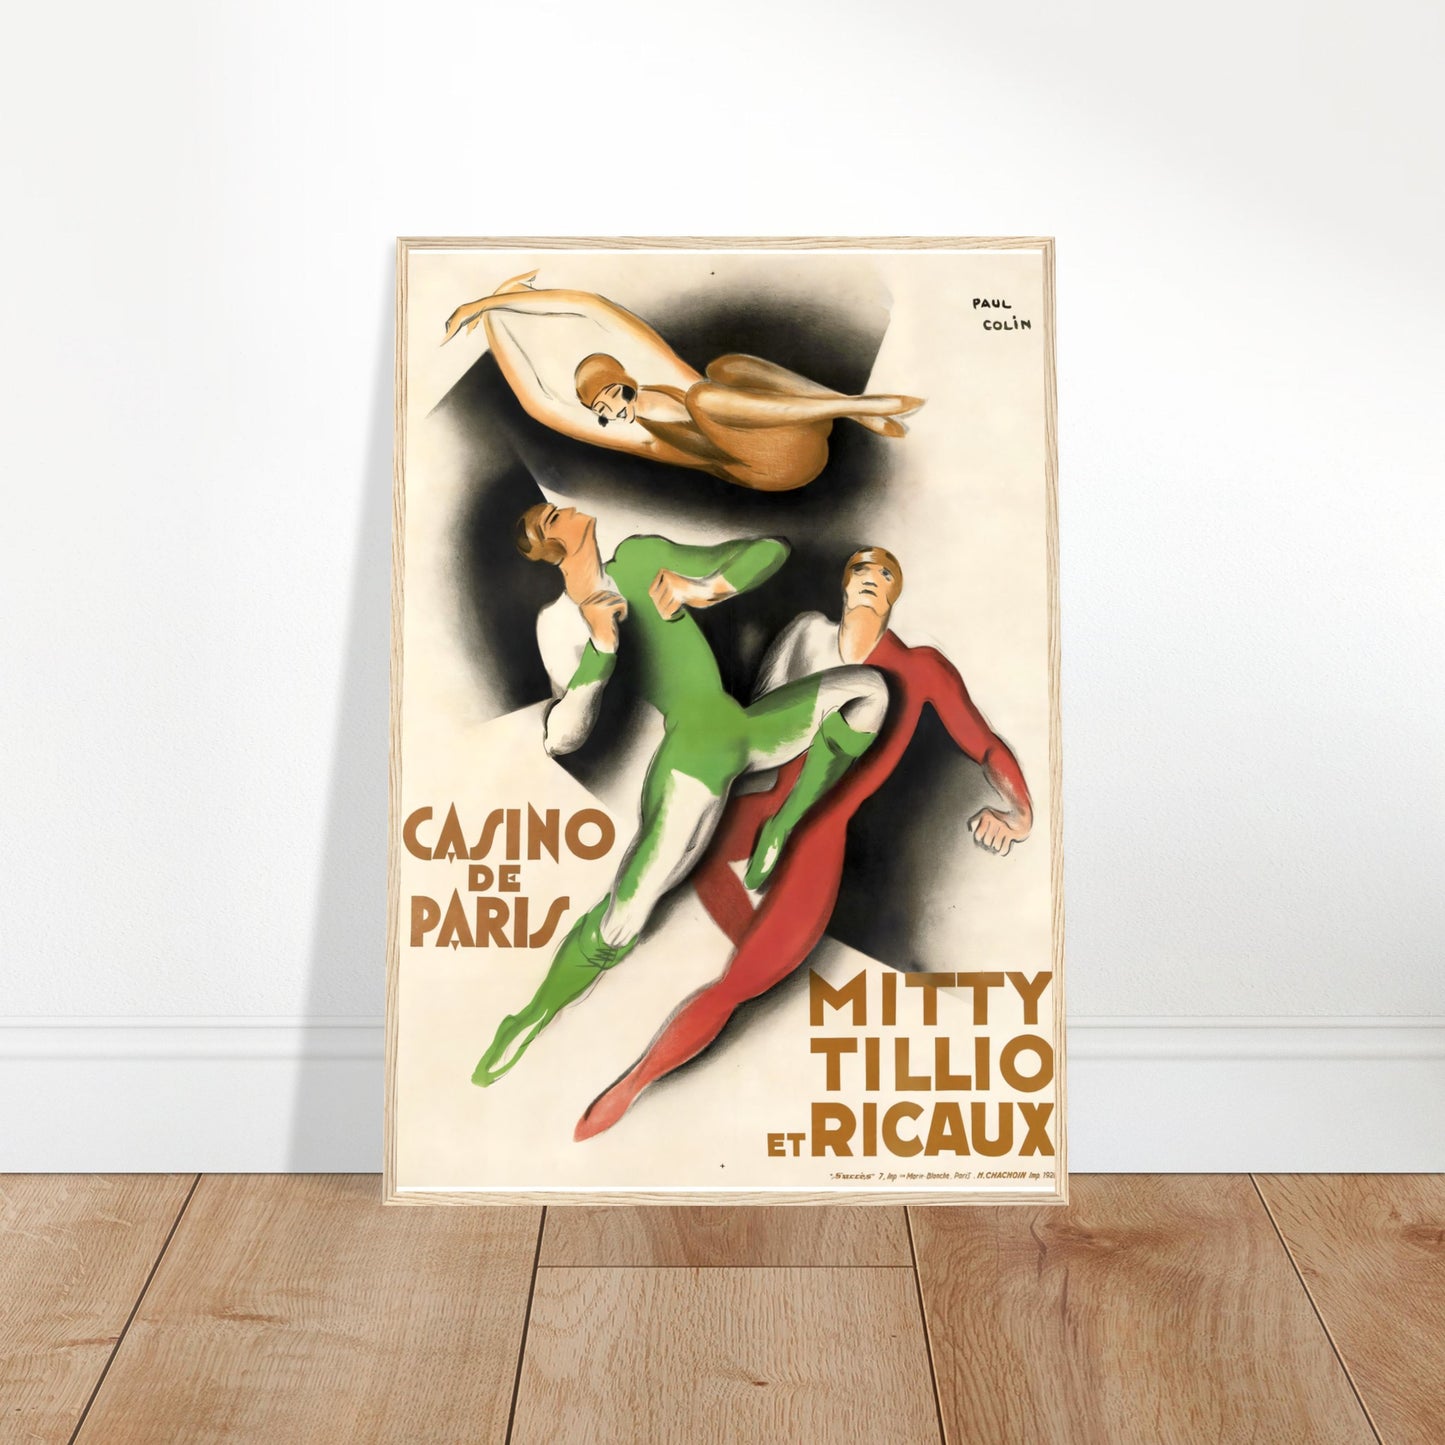 Vintage Poster Reprint on Premium Matte paper - Posterify